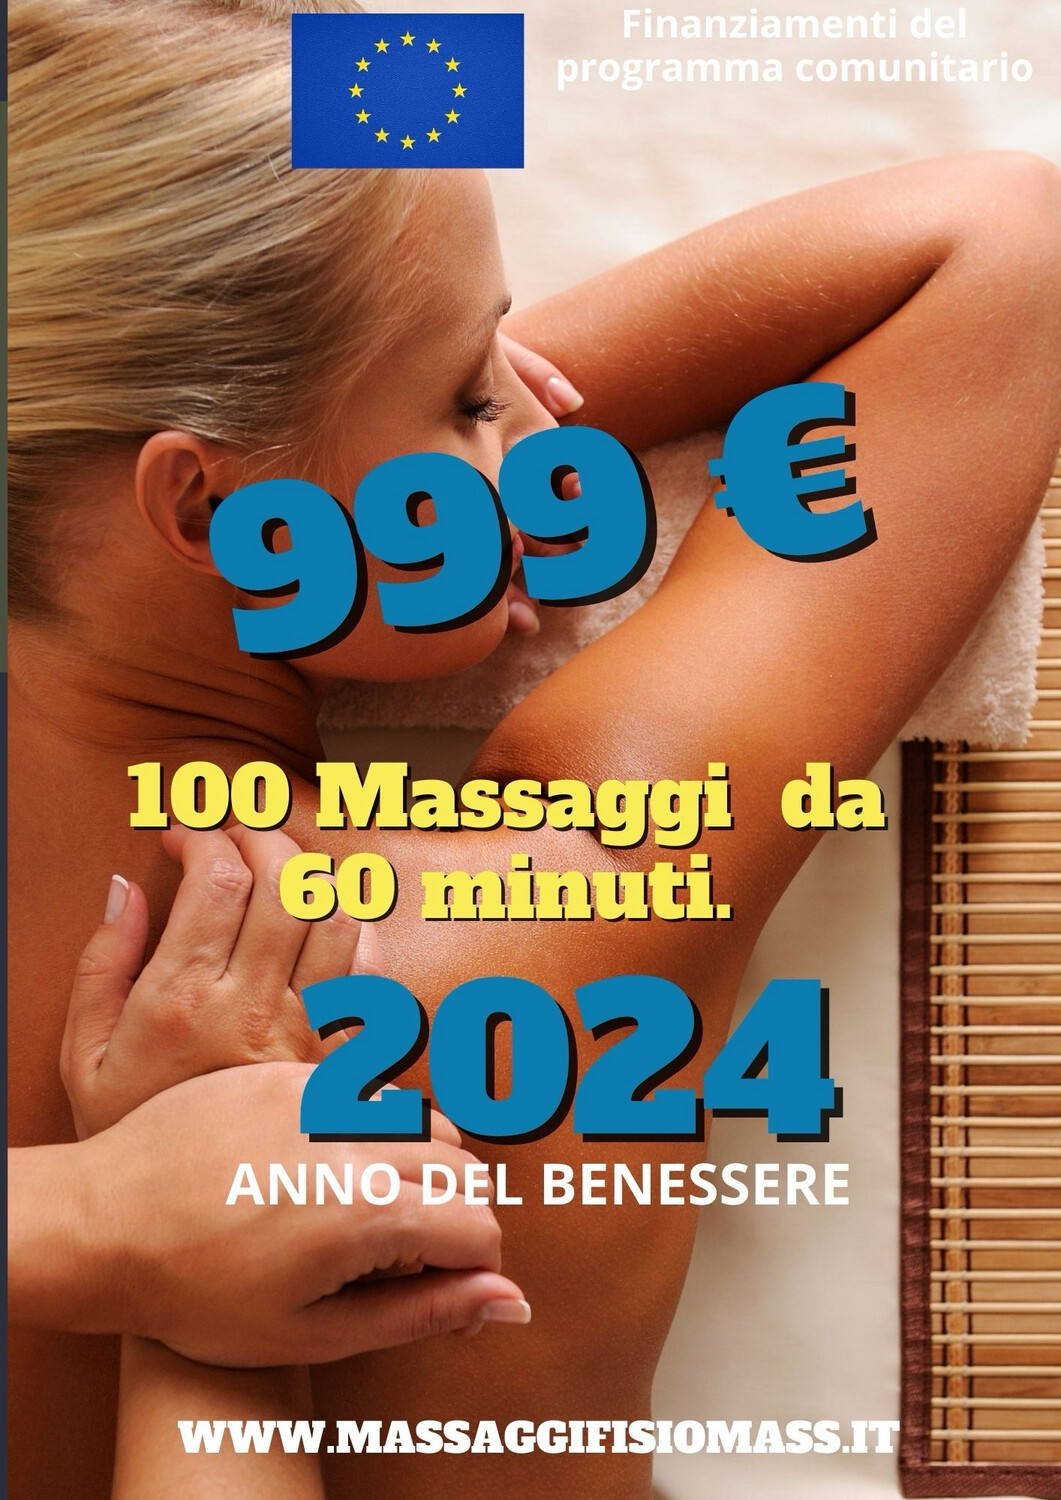 Fisiomass Vip Massage + 100